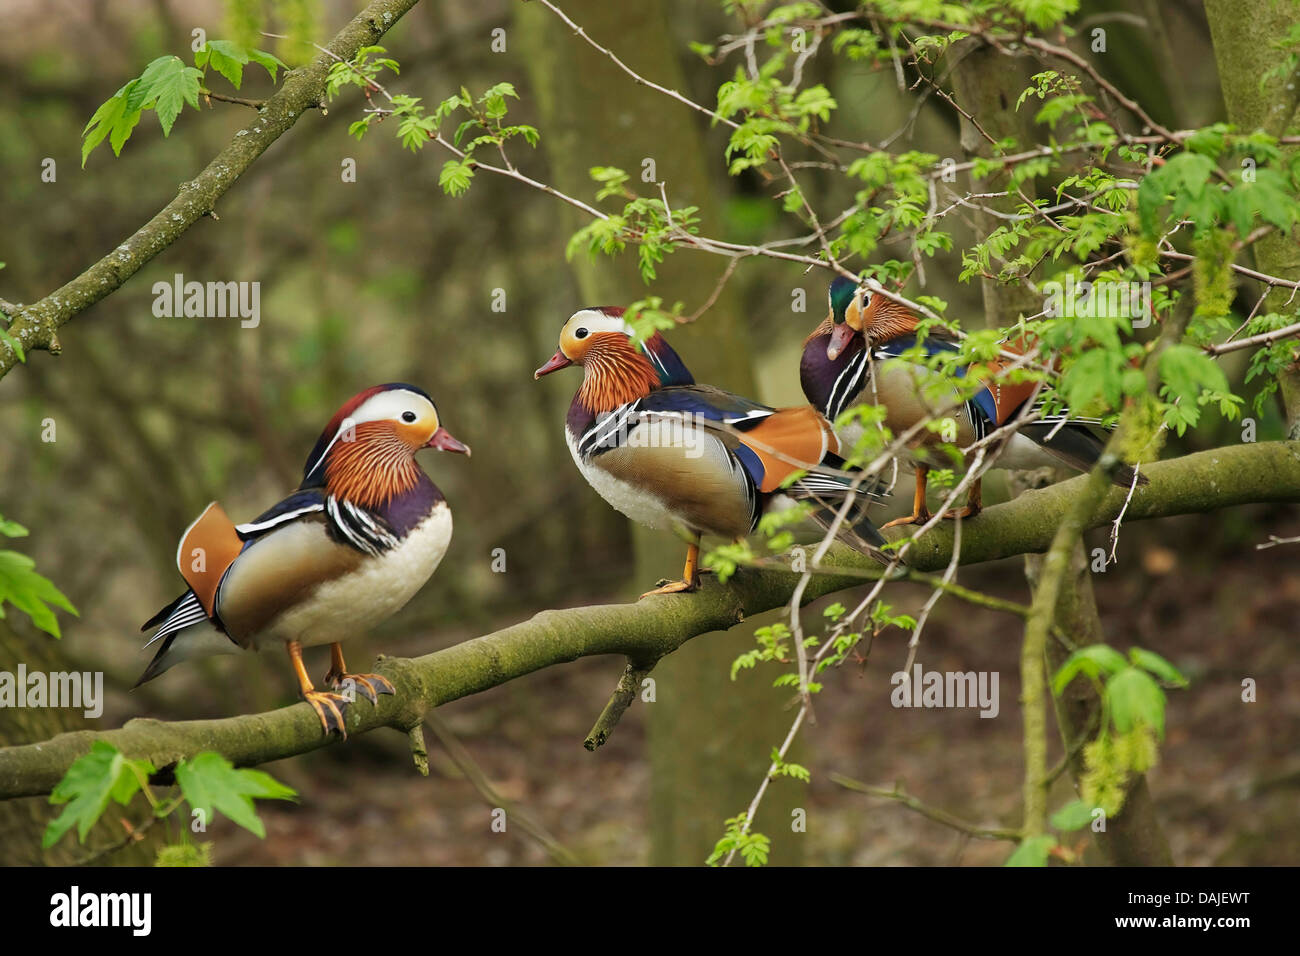 mandarin duck (Aix galericulata), three mandarin ducks sitting side by side on a branch, Germany Stock Photo